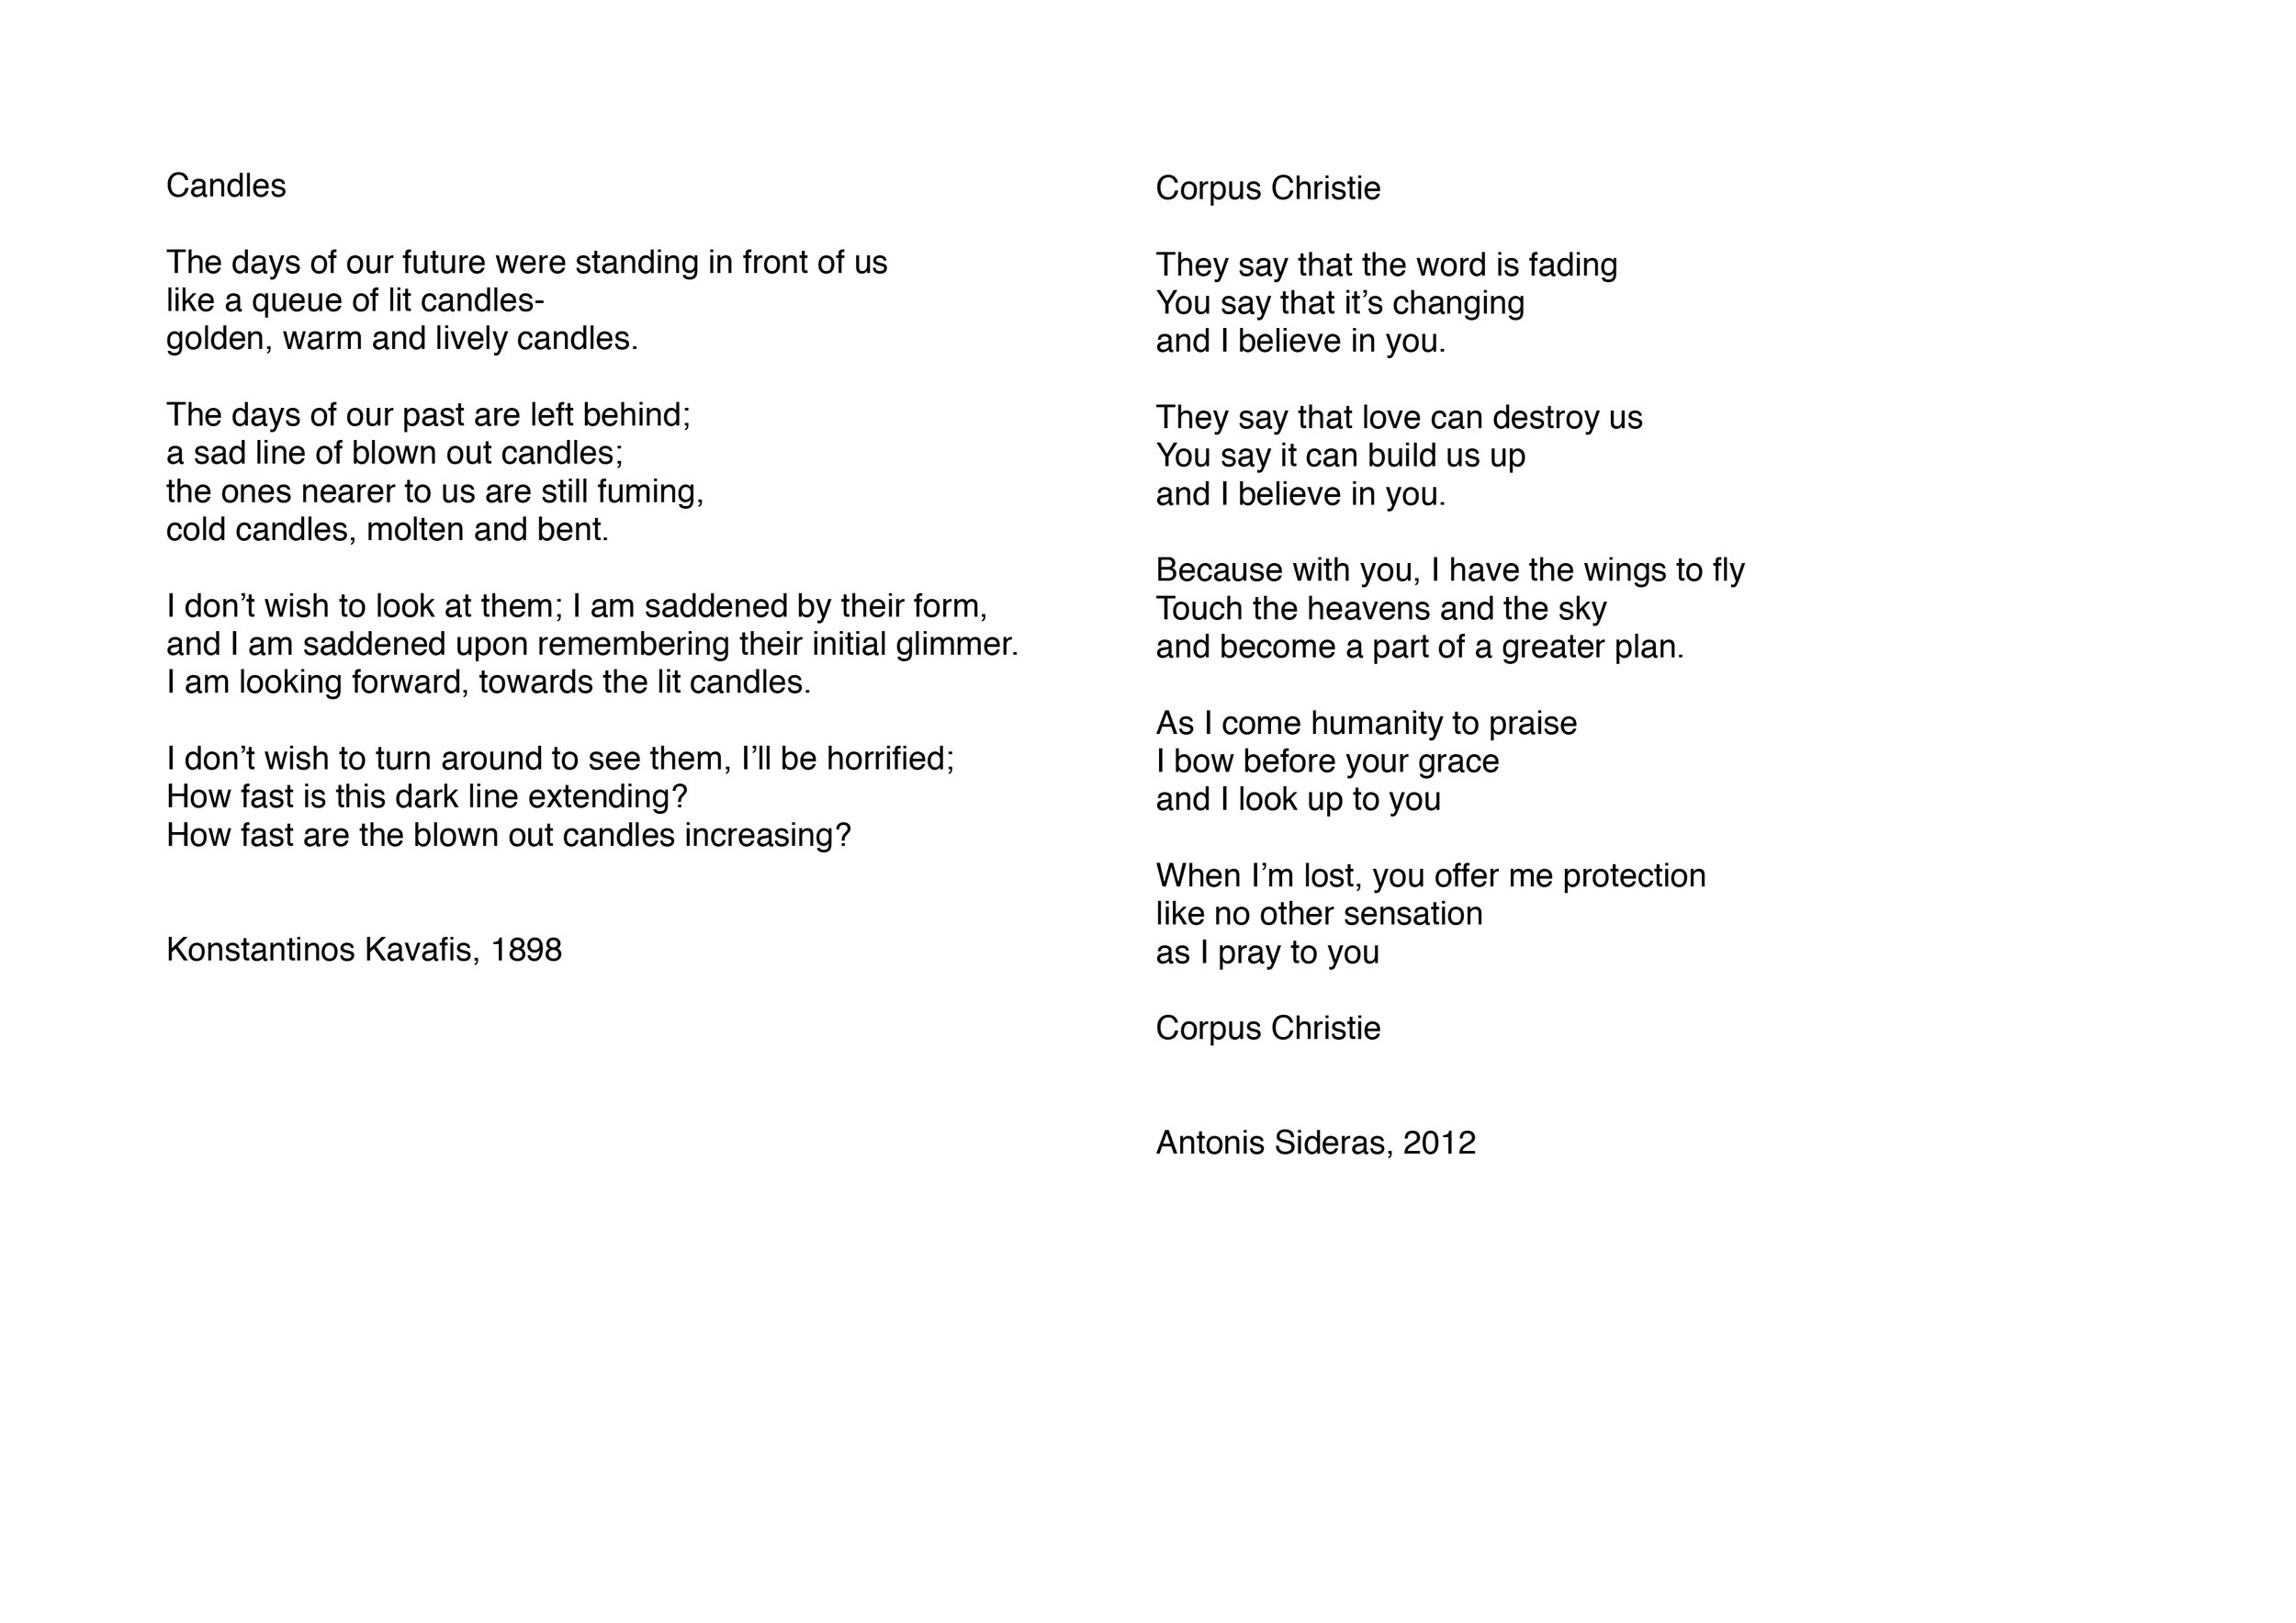 Corpus Chritie - Text and poetry